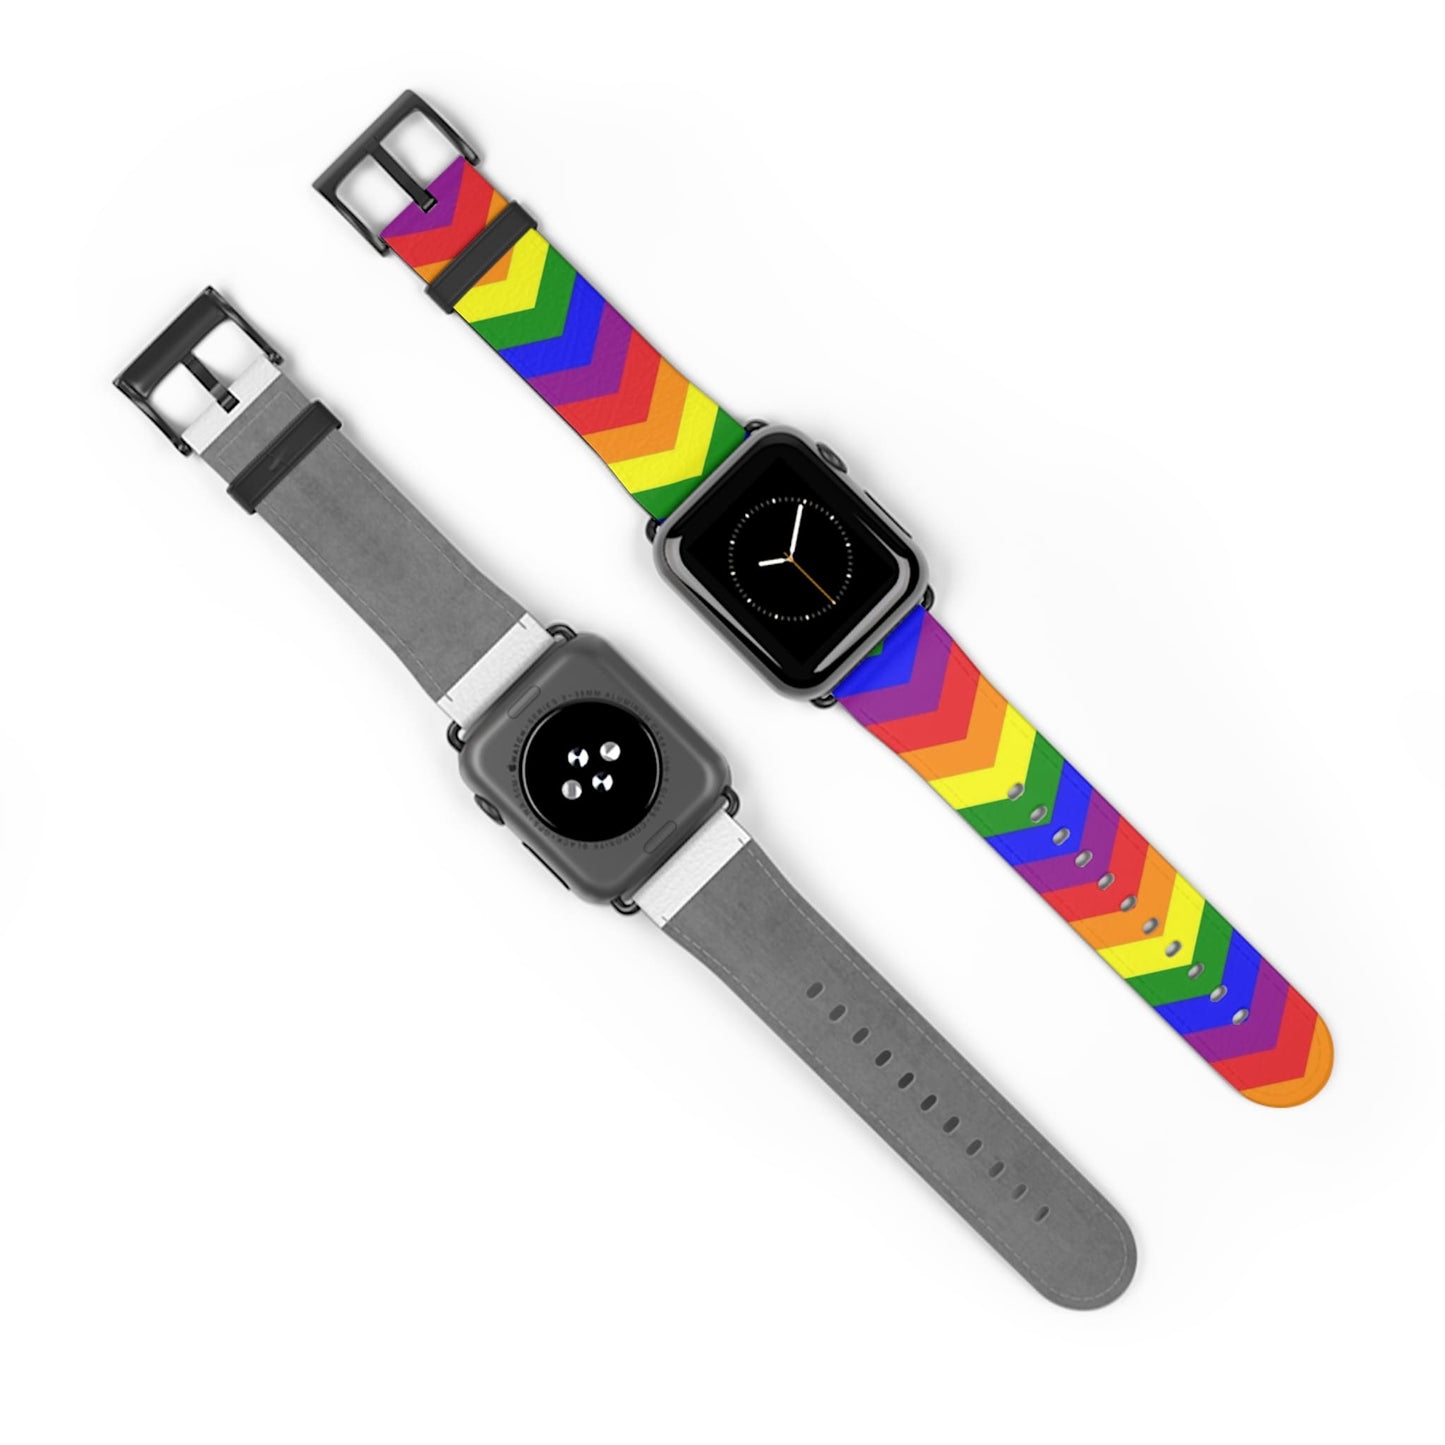 LGBT apple watch band, rainbow chevron pattern